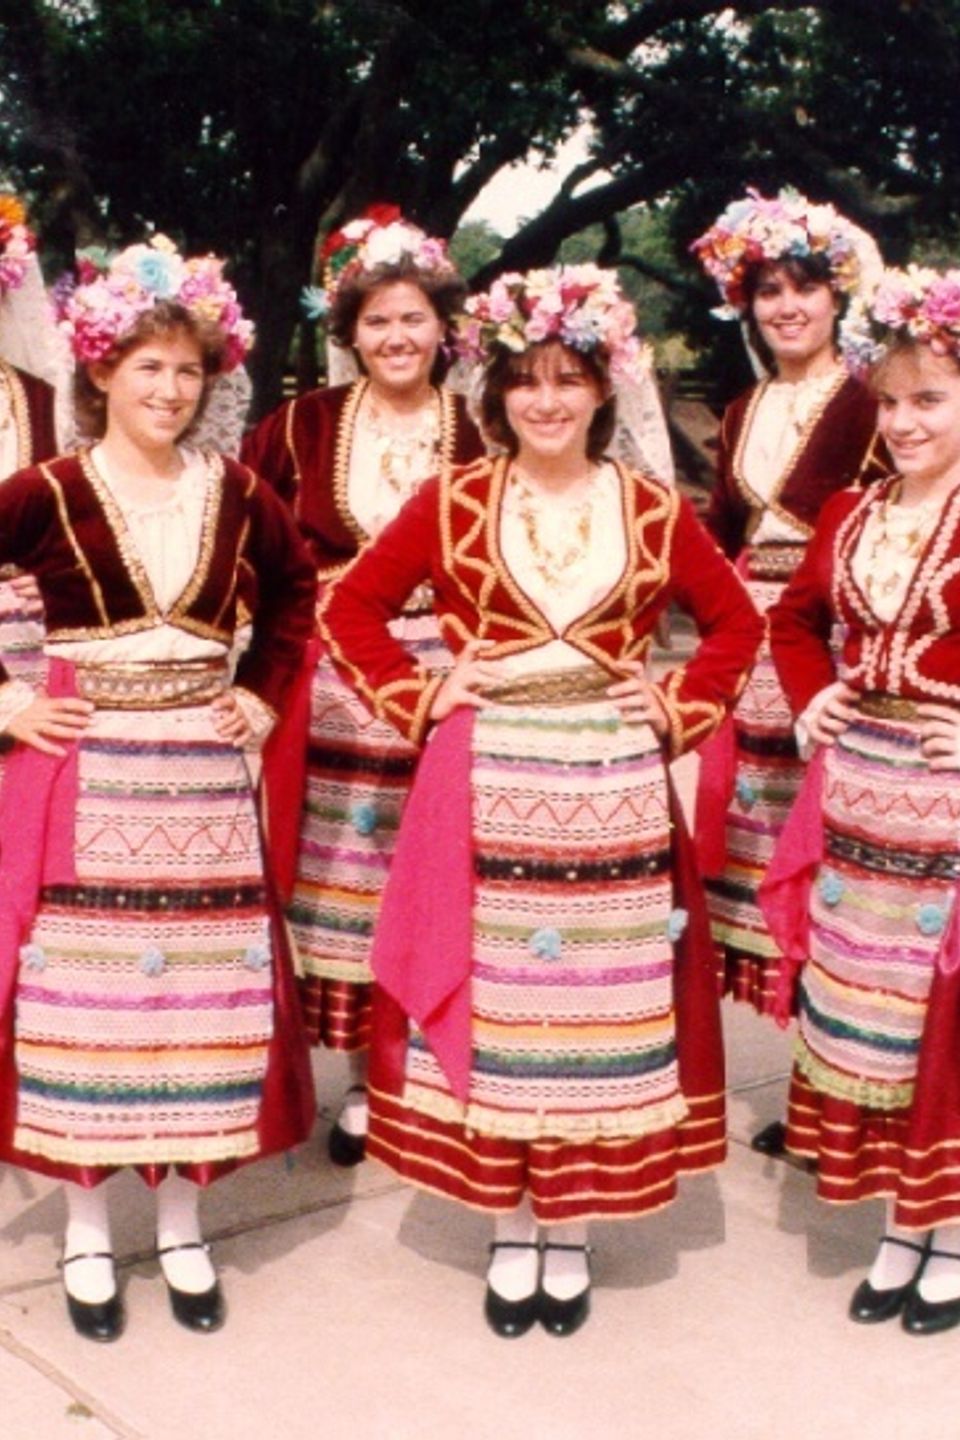 1986 girls posing in corfu costumes 377